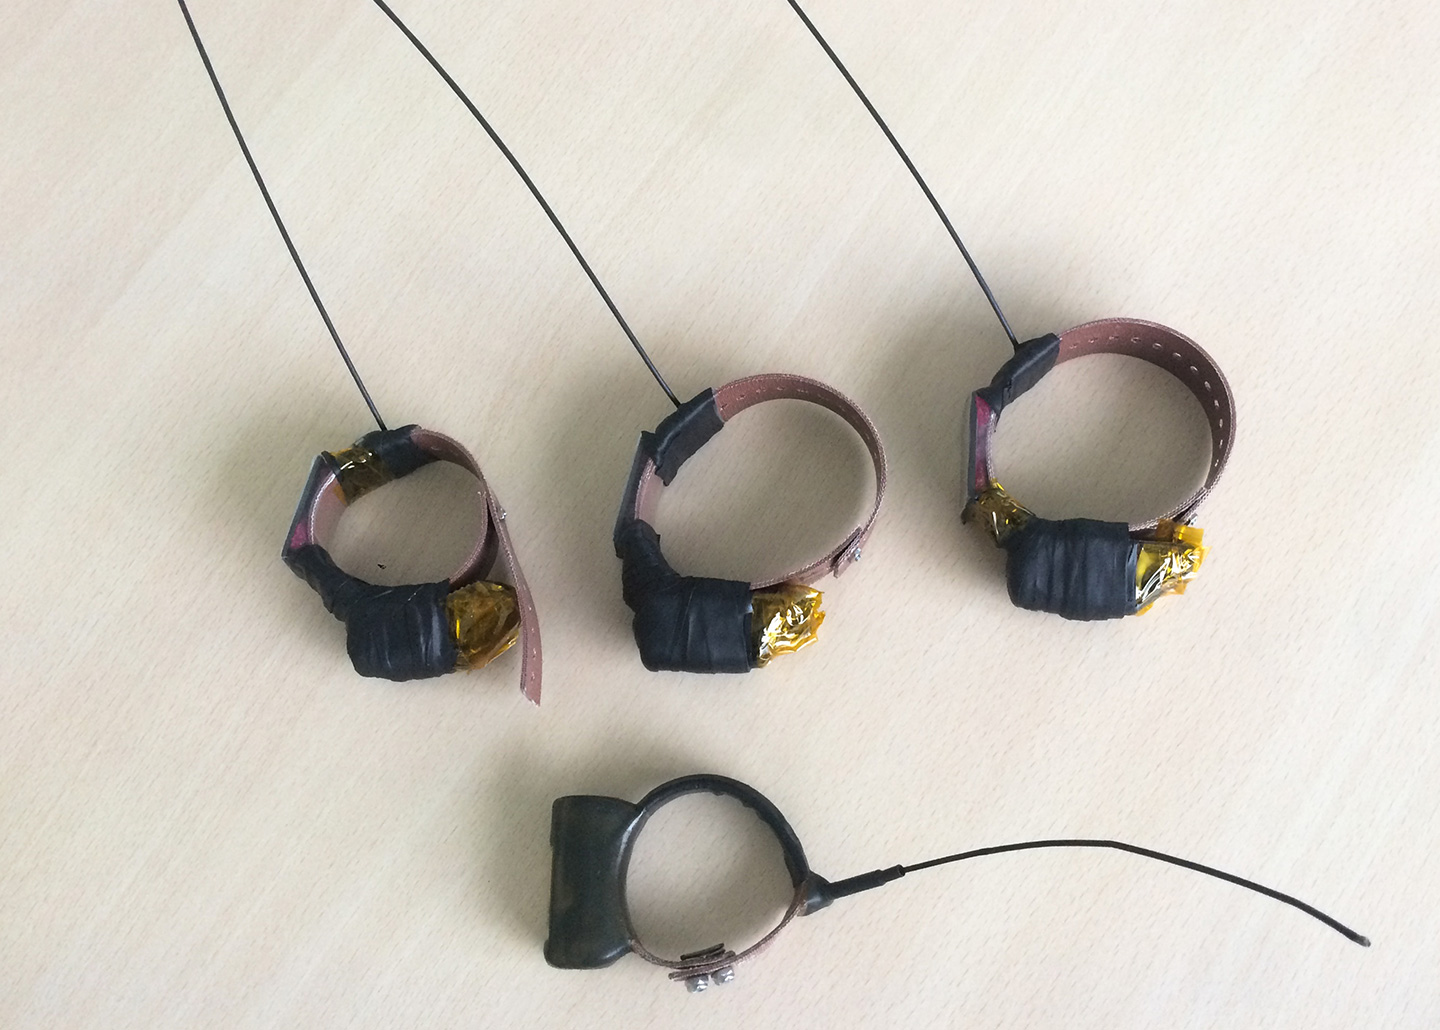 Radio collars